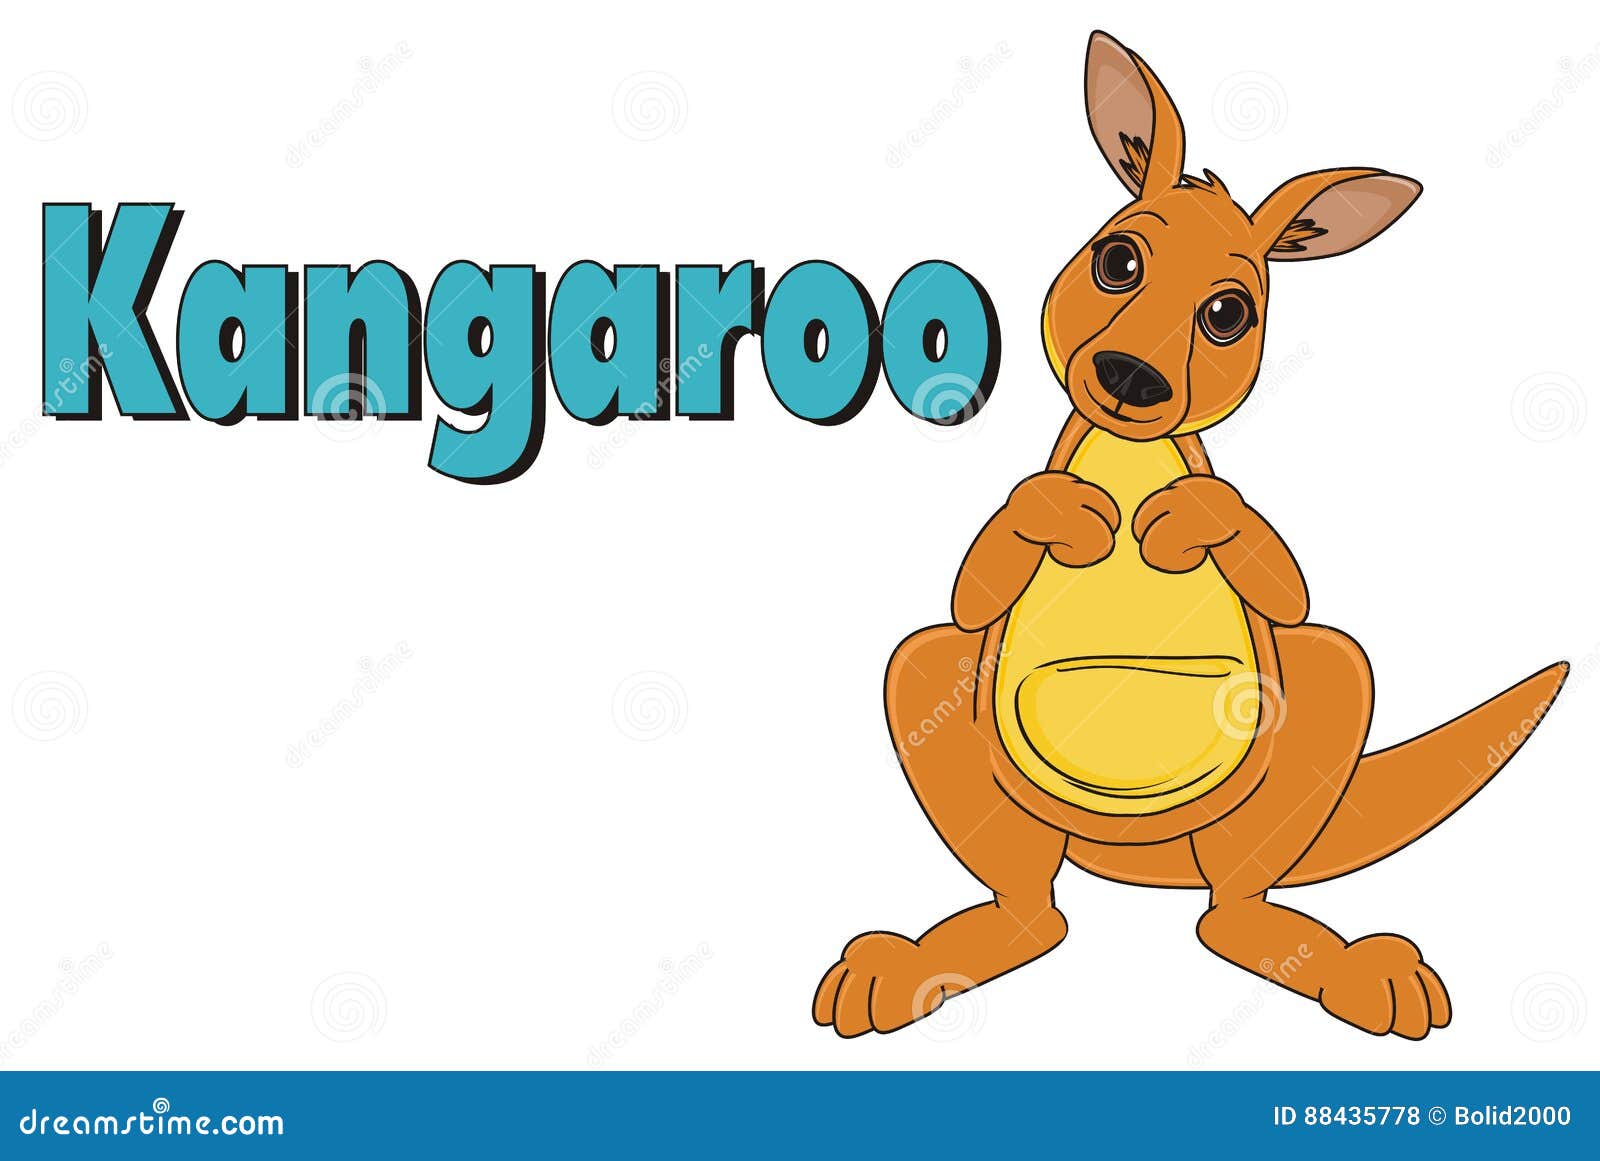 Кенгуру найти слово. Кенгуру на английском. Кенгуру для детей на английском. Надпись кенгуру для детей. Kangaroo карточка.